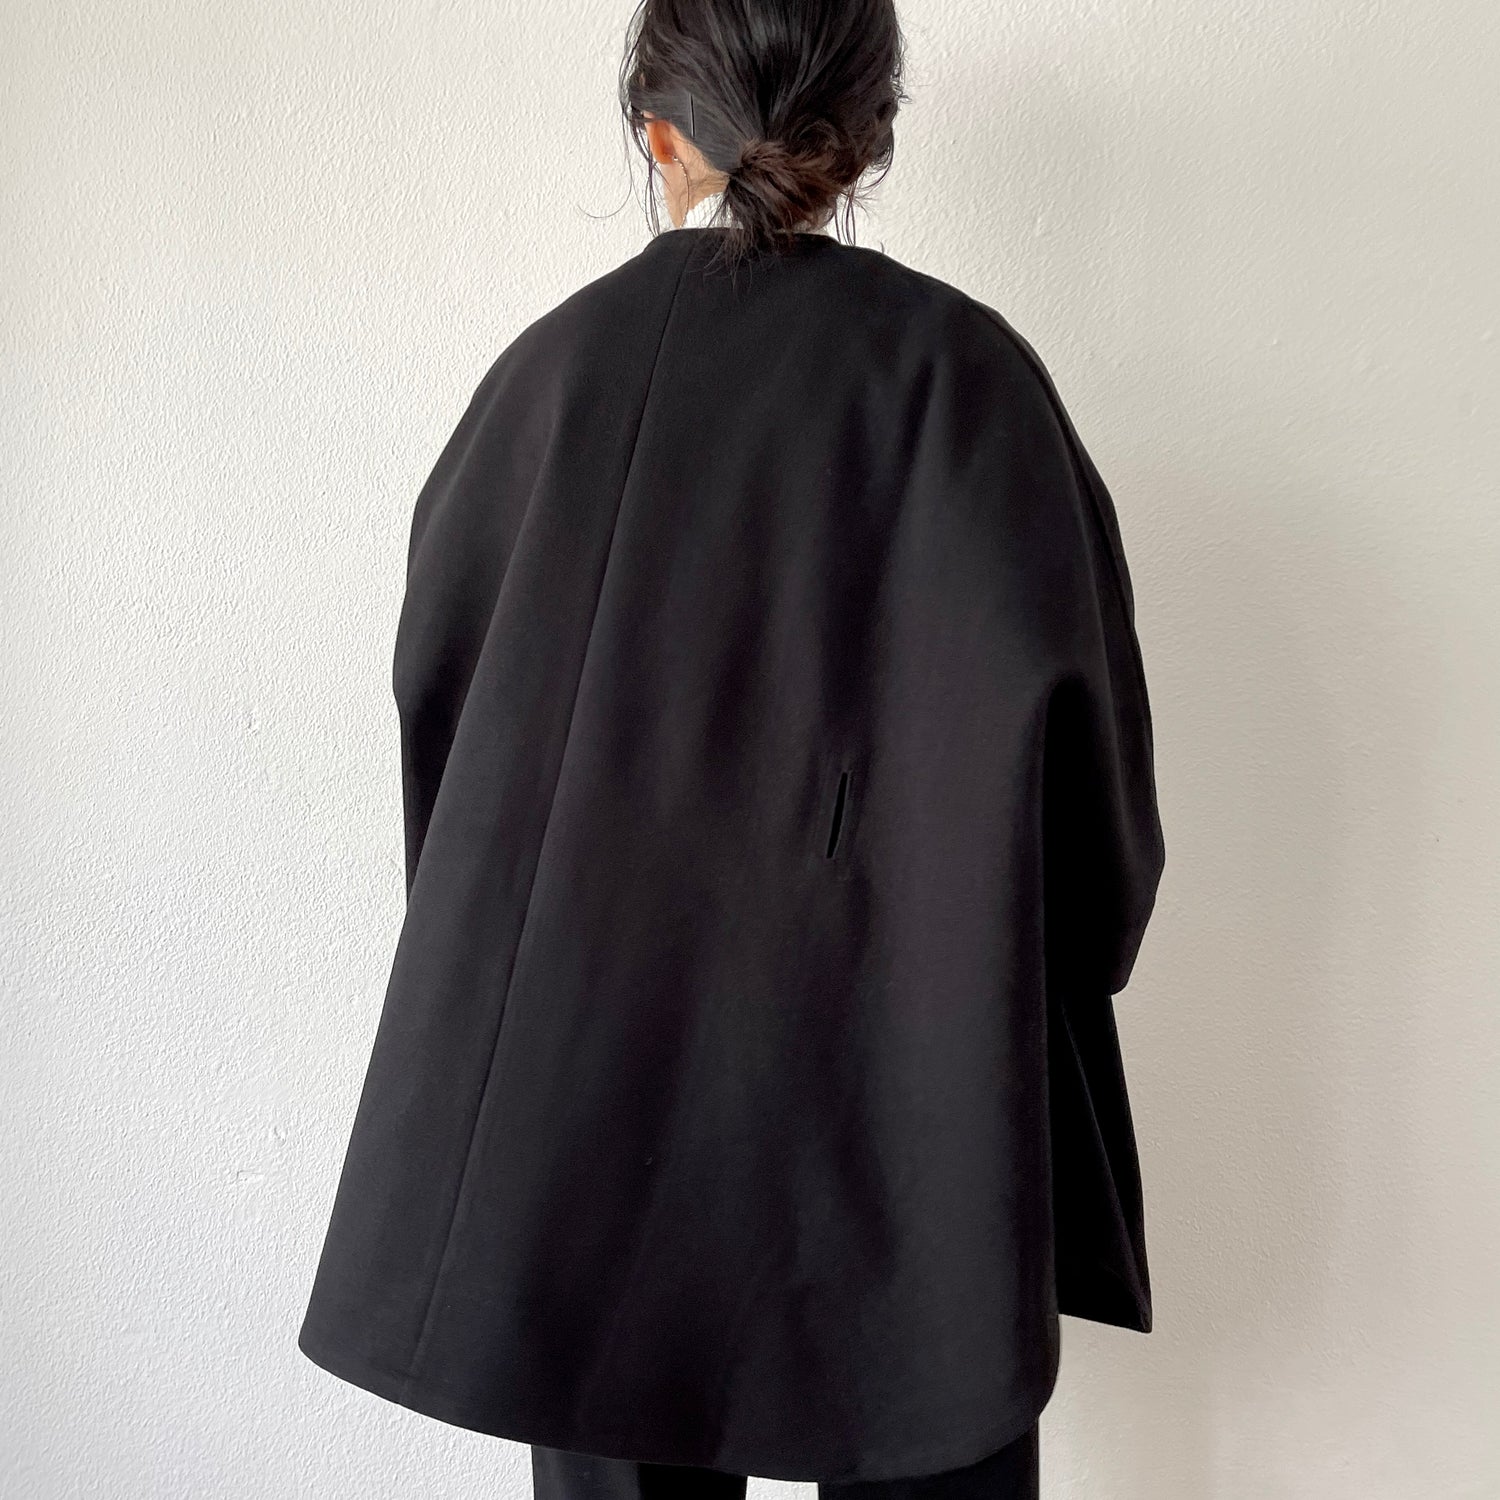 poncho coat muffler set  / black